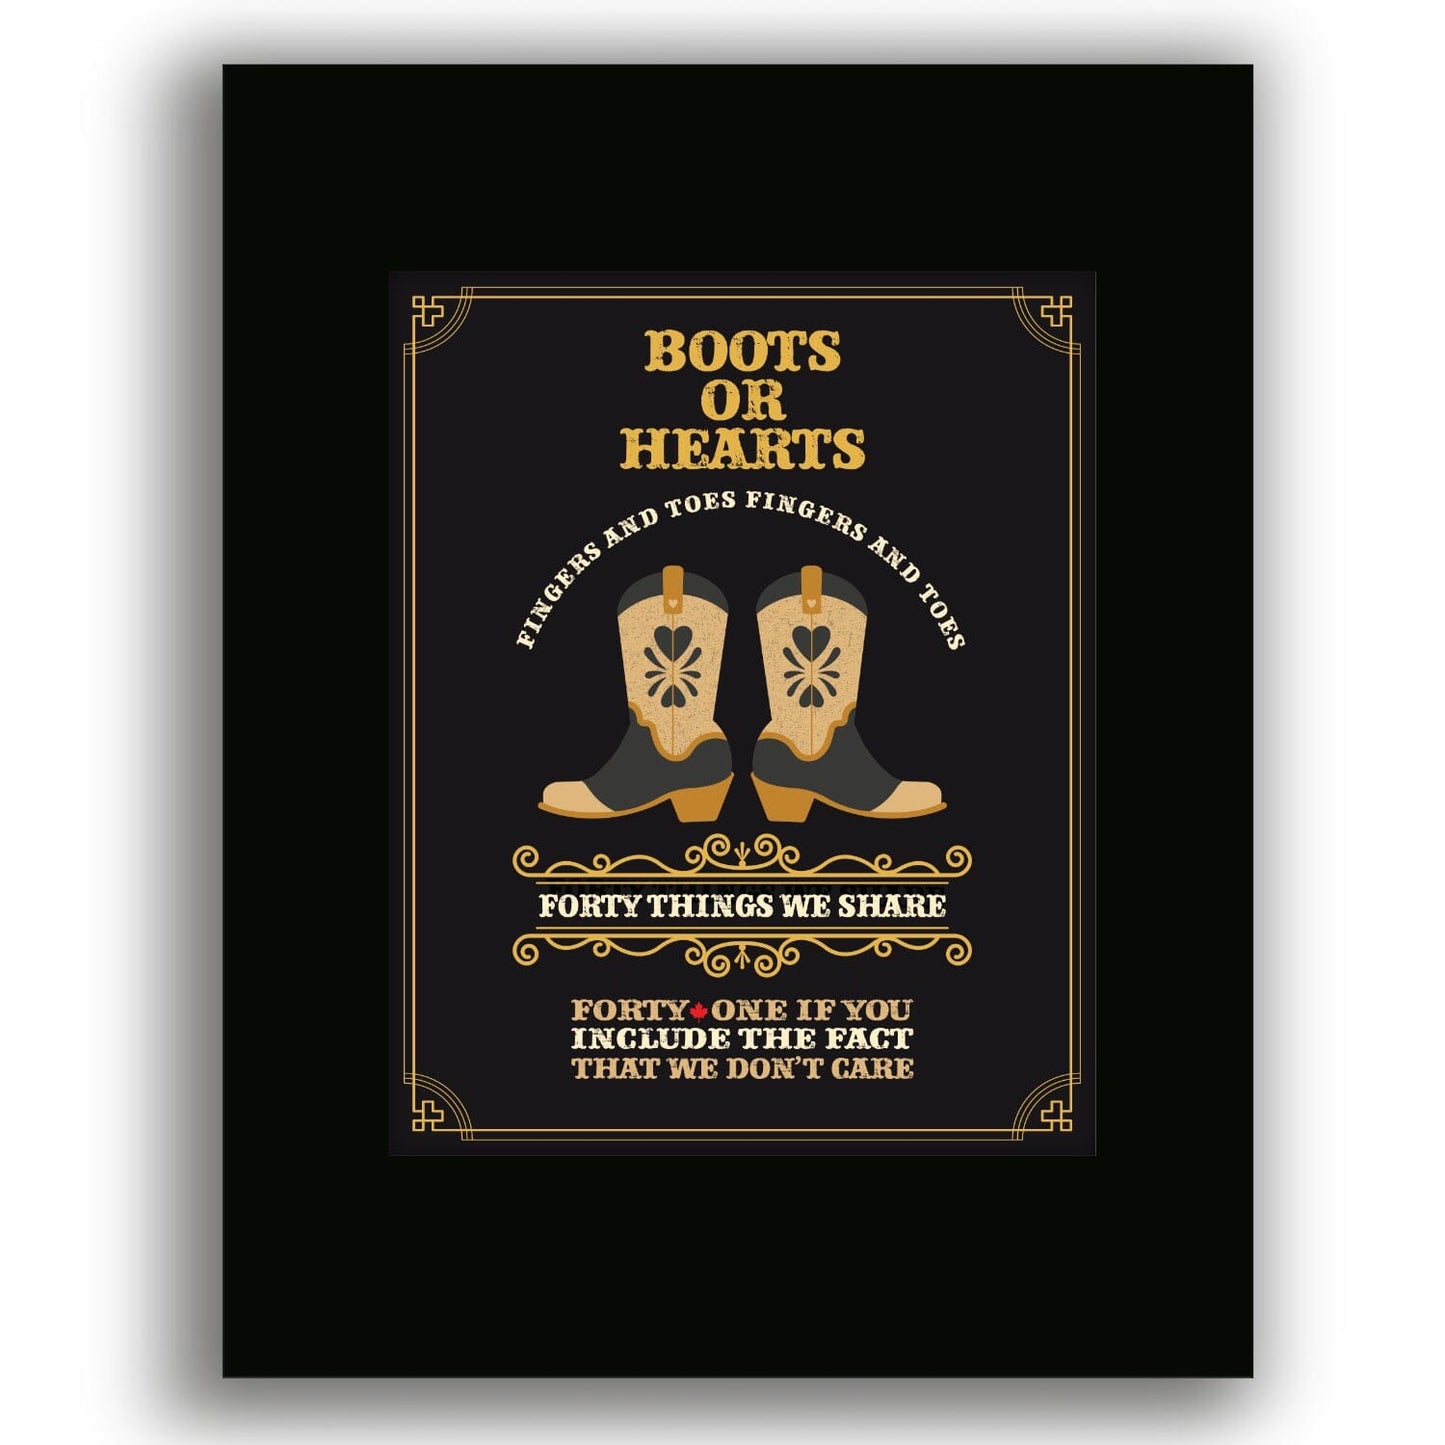 Boots or Hearts by the Tragically Hip - Music Wall Art Print Song Lyrics Art Song Lyrics Art 